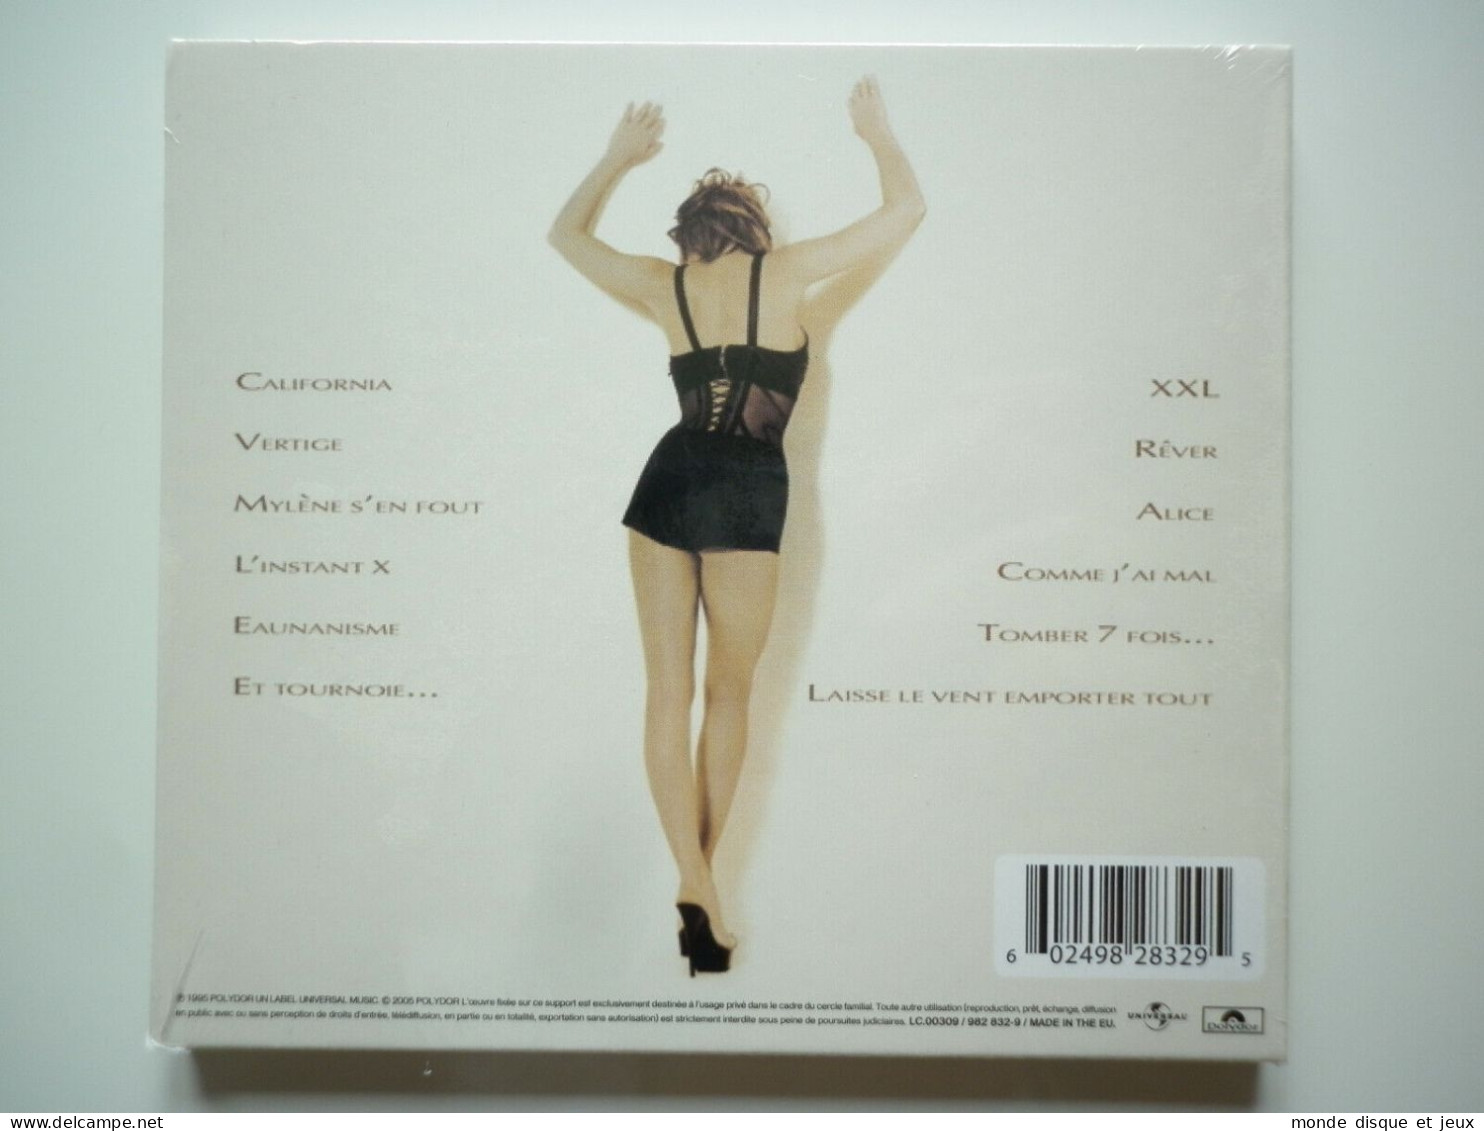 Mylene Farmer Cd Album Digipack Anamorphosee - Altri - Francese